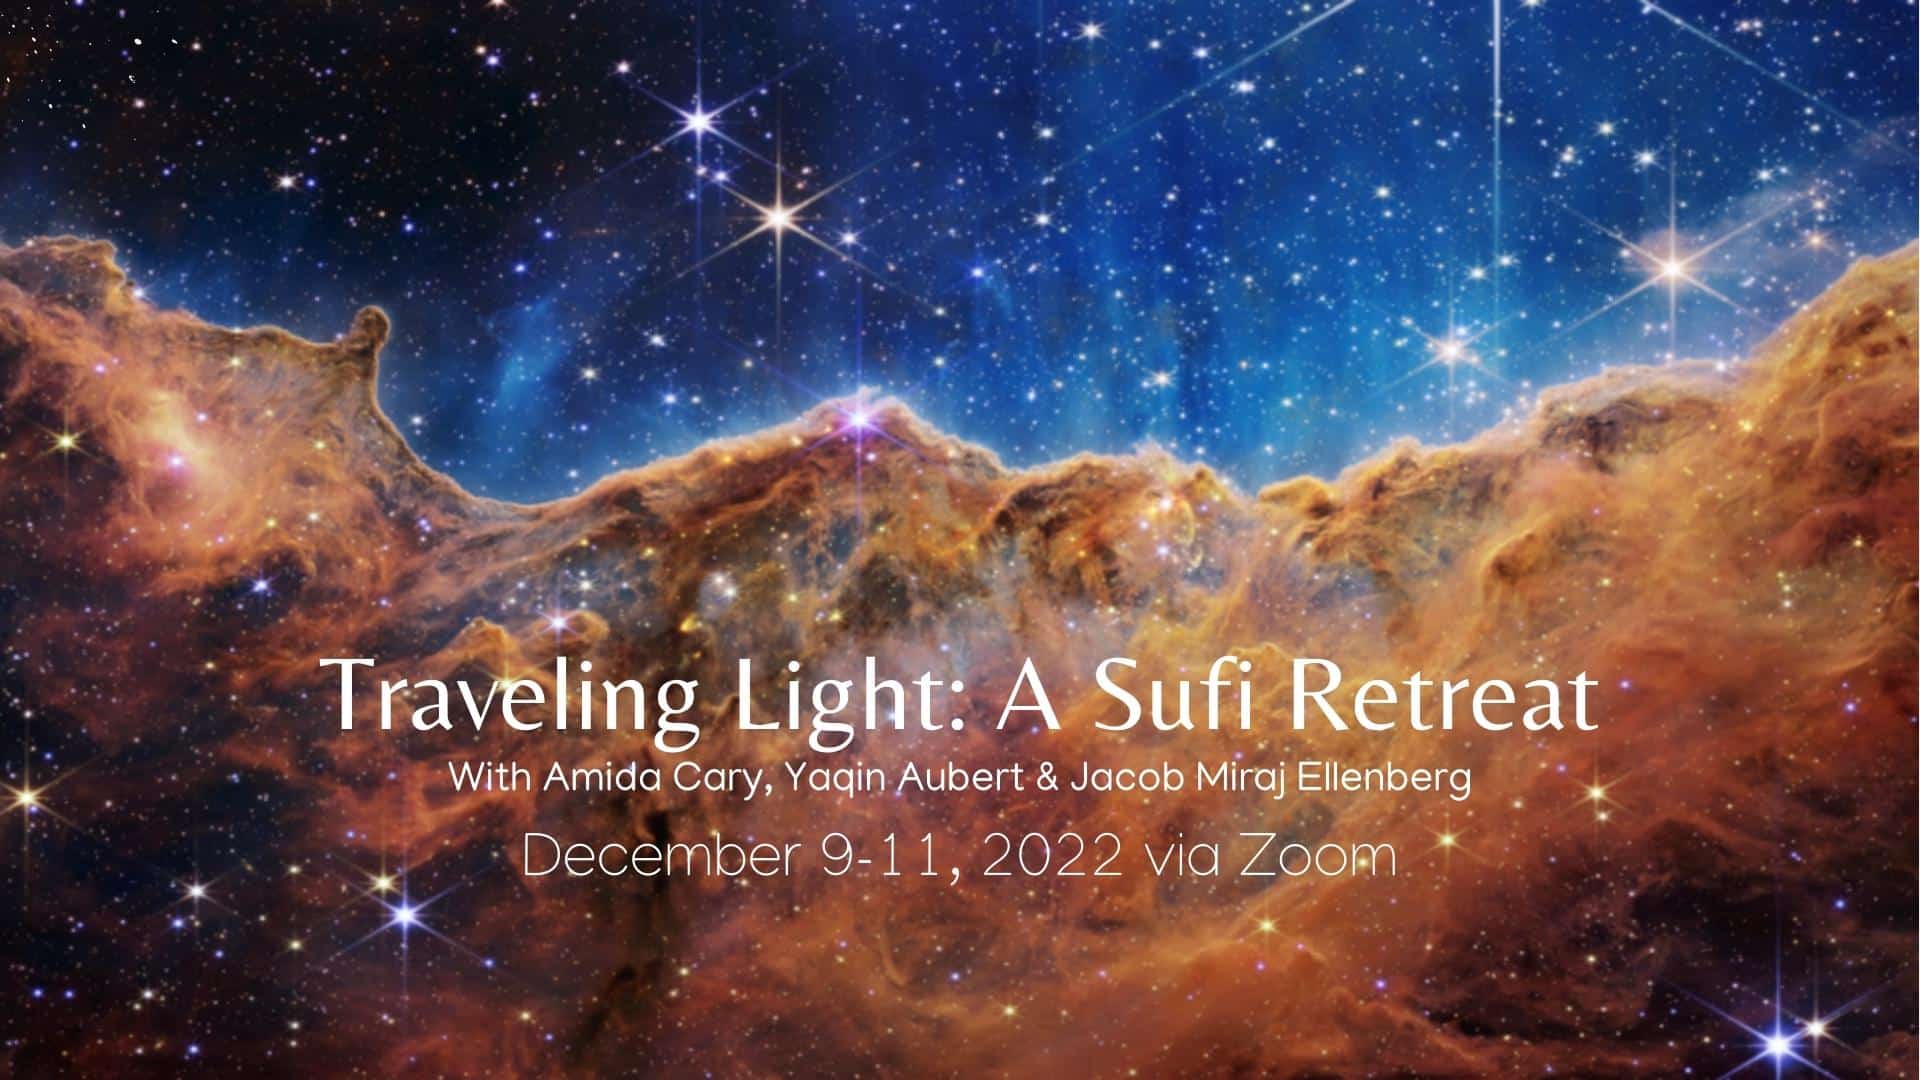 Traveling Light: A Sufi Retreat